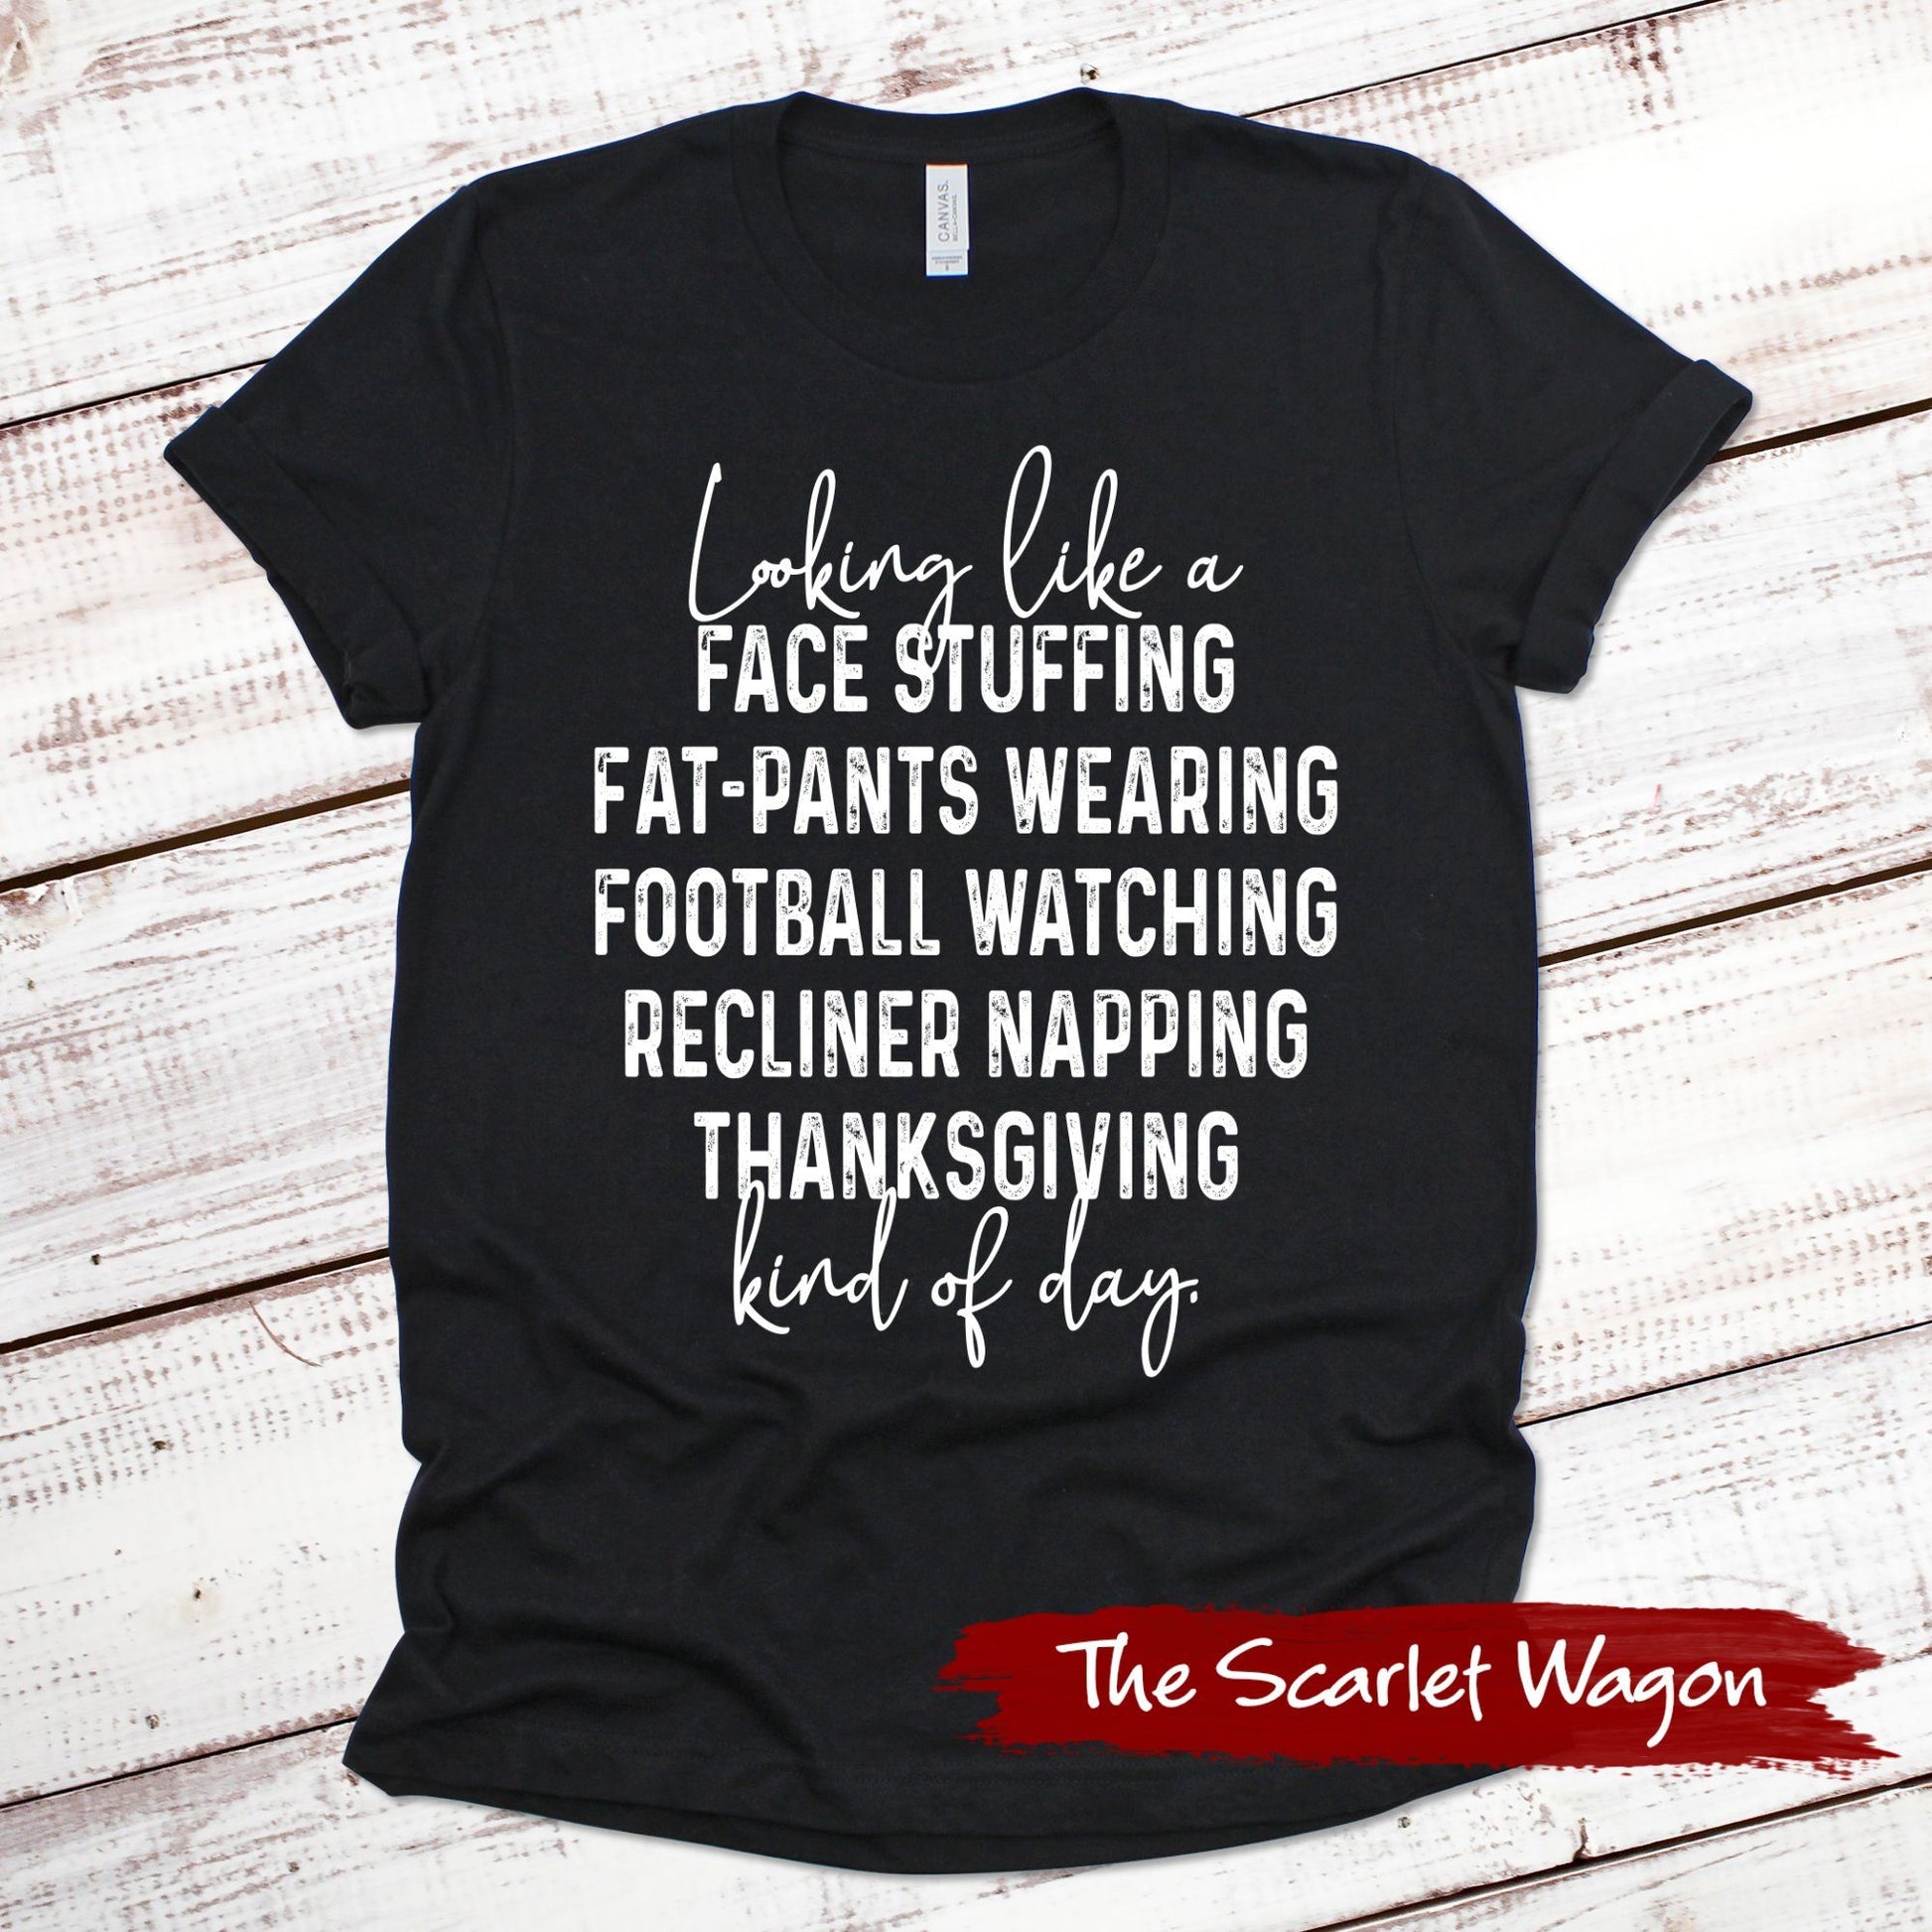 Football Thanksgiving Kind of Day Thanksgiving Shirt Scarlet Wagon Black XS 